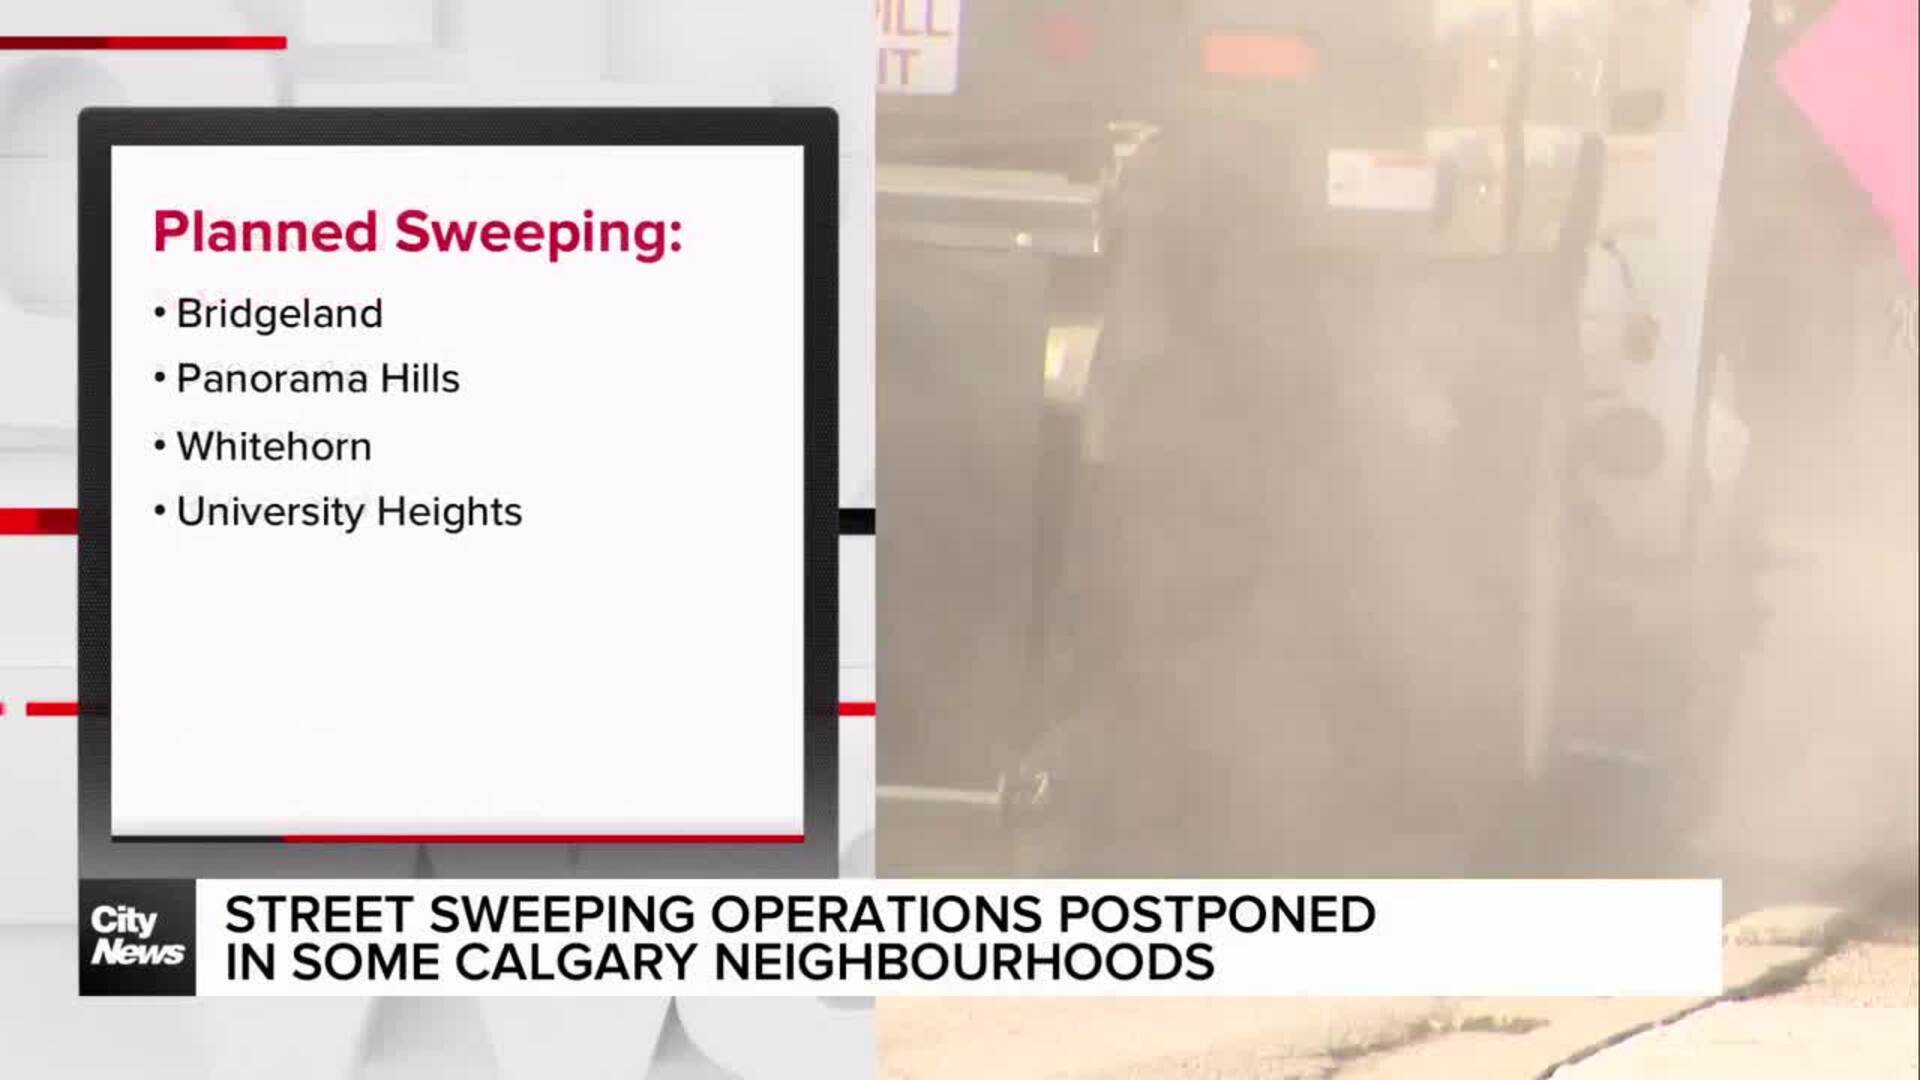 Street sweeping operations postponed in some Calgary neighbourhoods